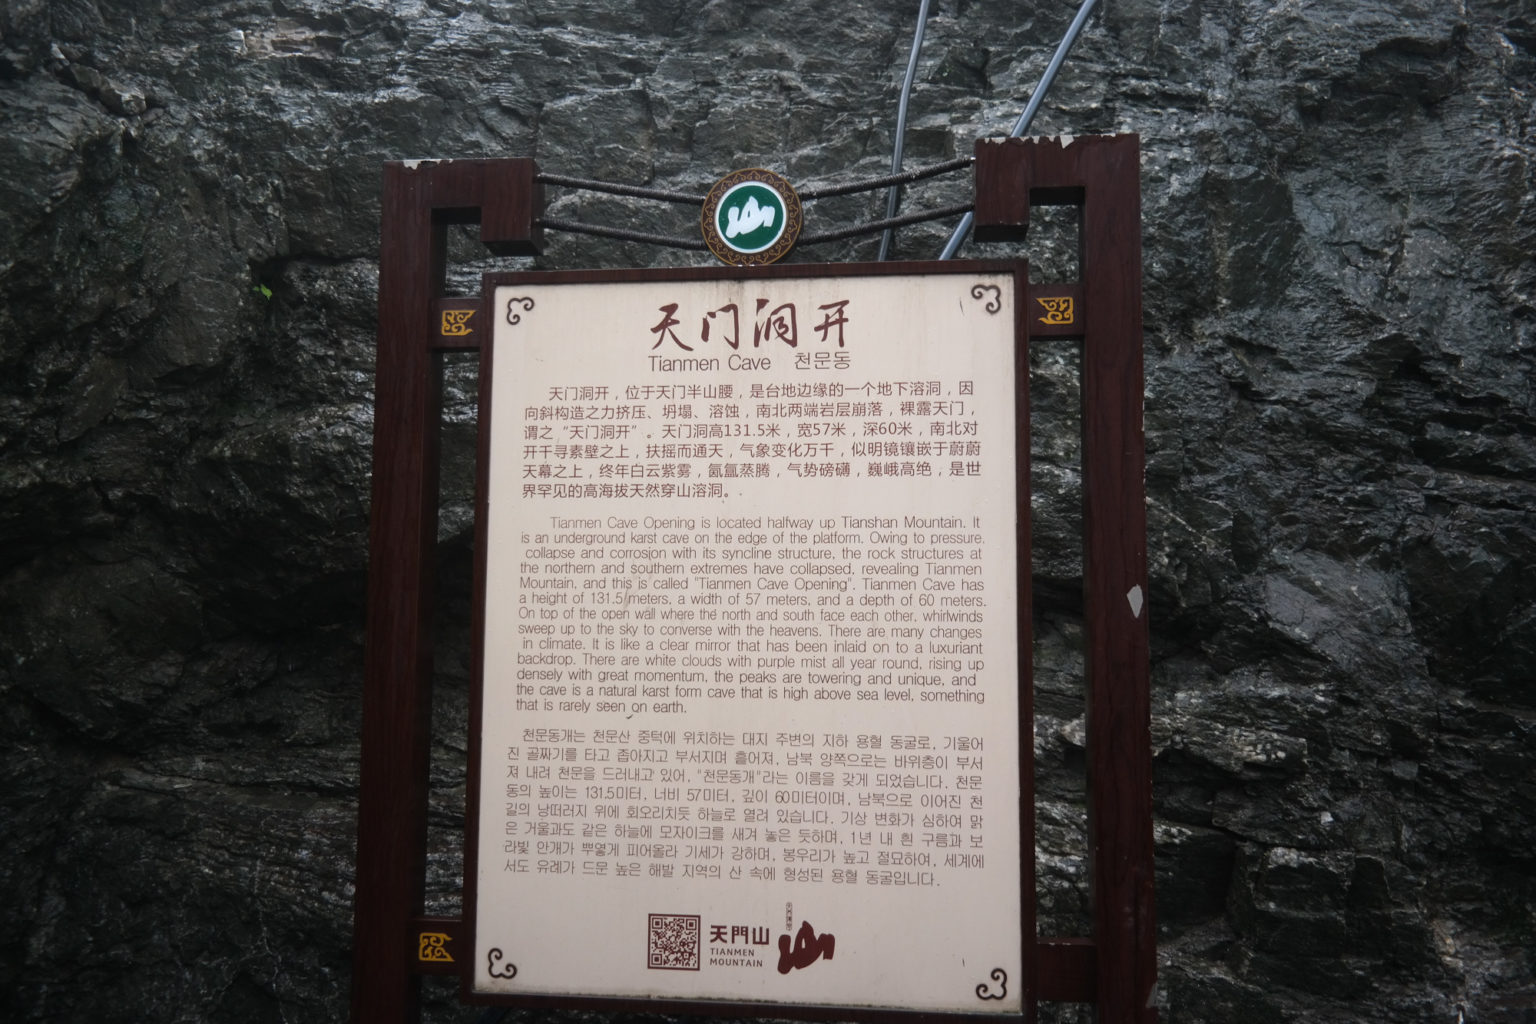 Tianmen Cave